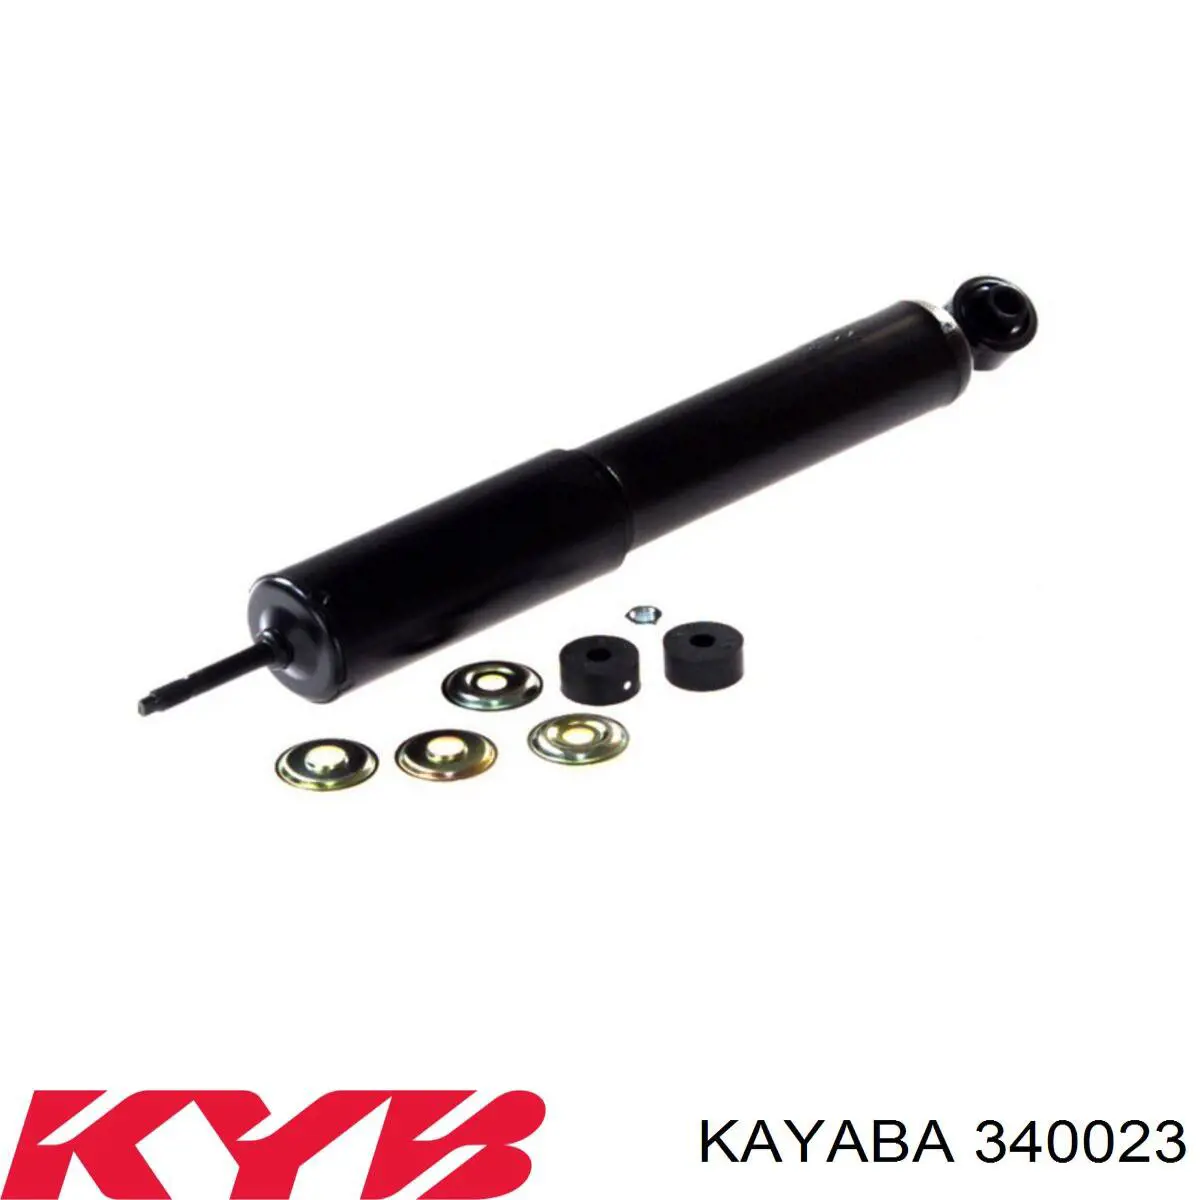 340023 Kayaba amortiguador delantero